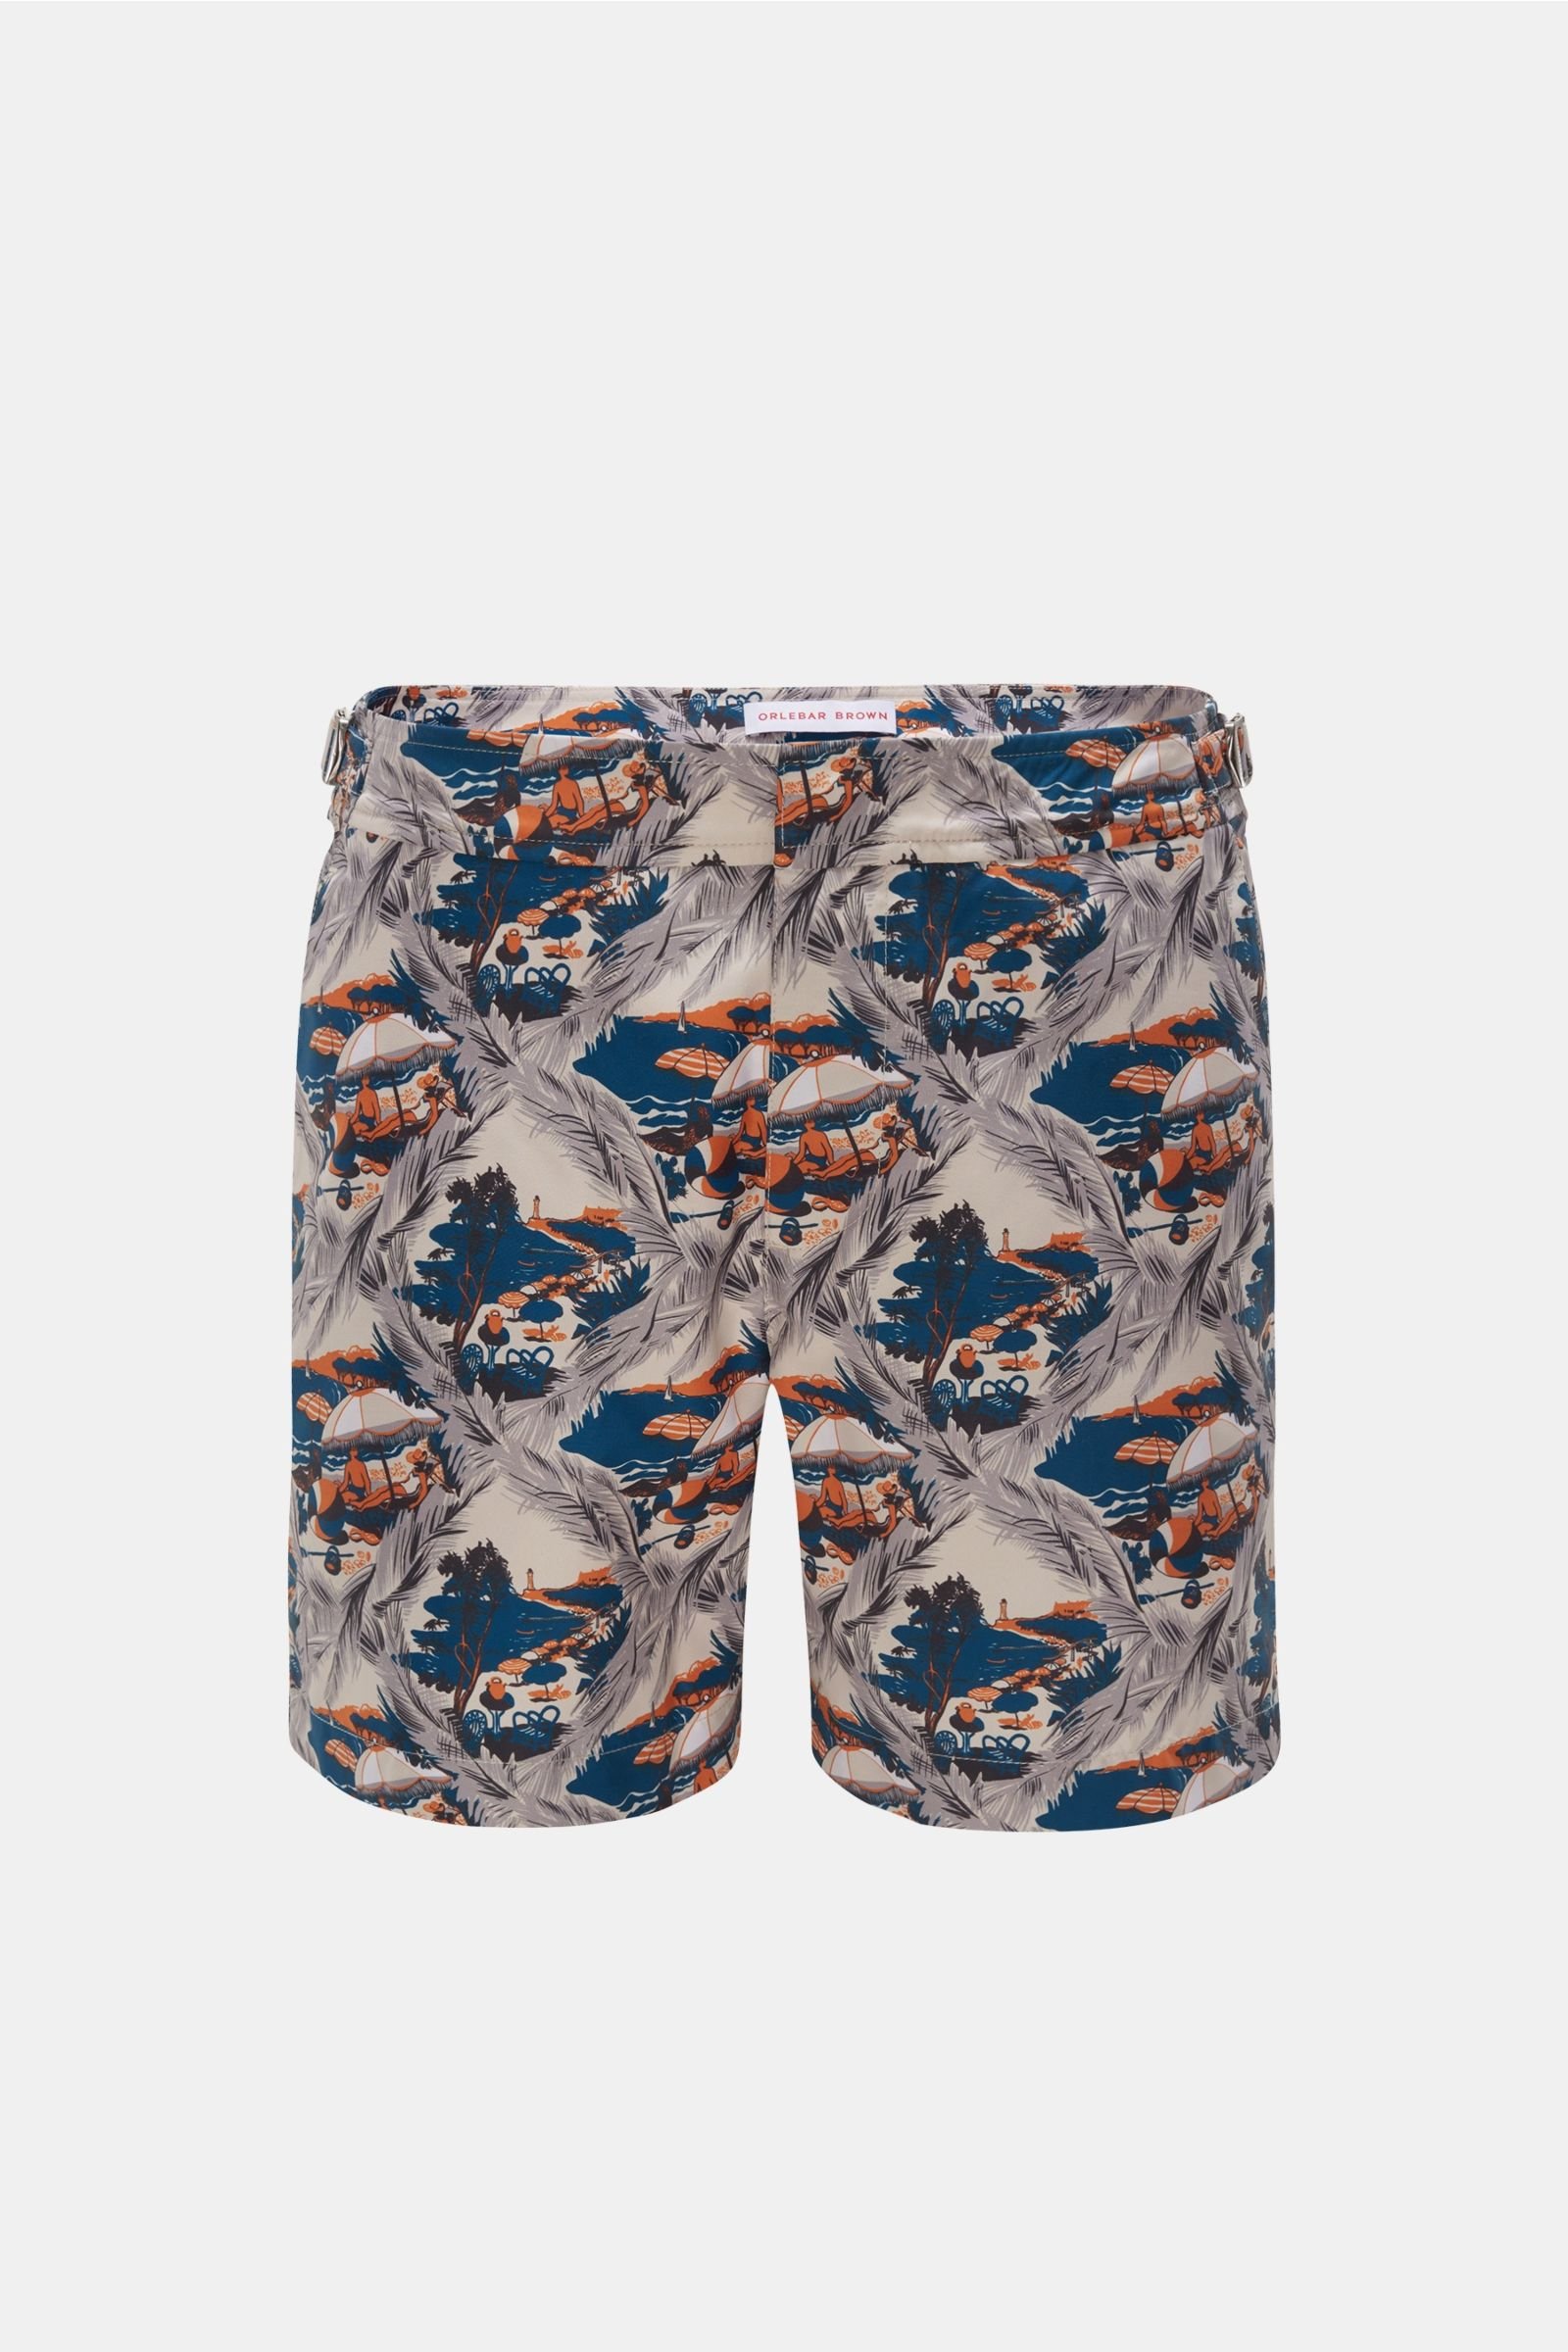 Swim shorts 'Bulldog' cream/navy patterned